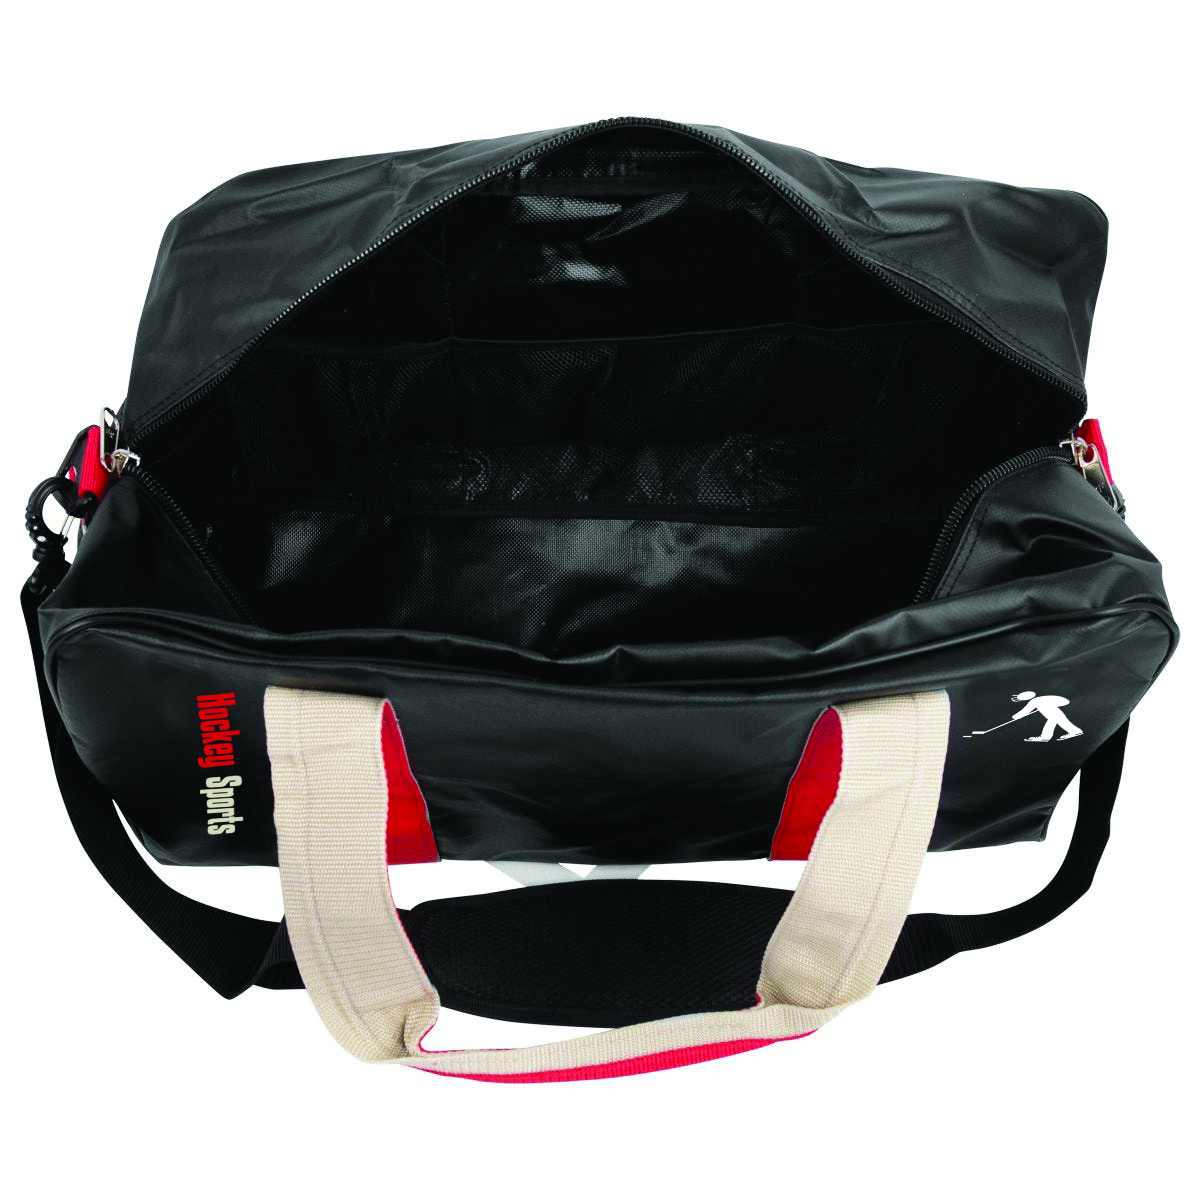 Customized Field Ice Hockey Equipment Duffel Bag